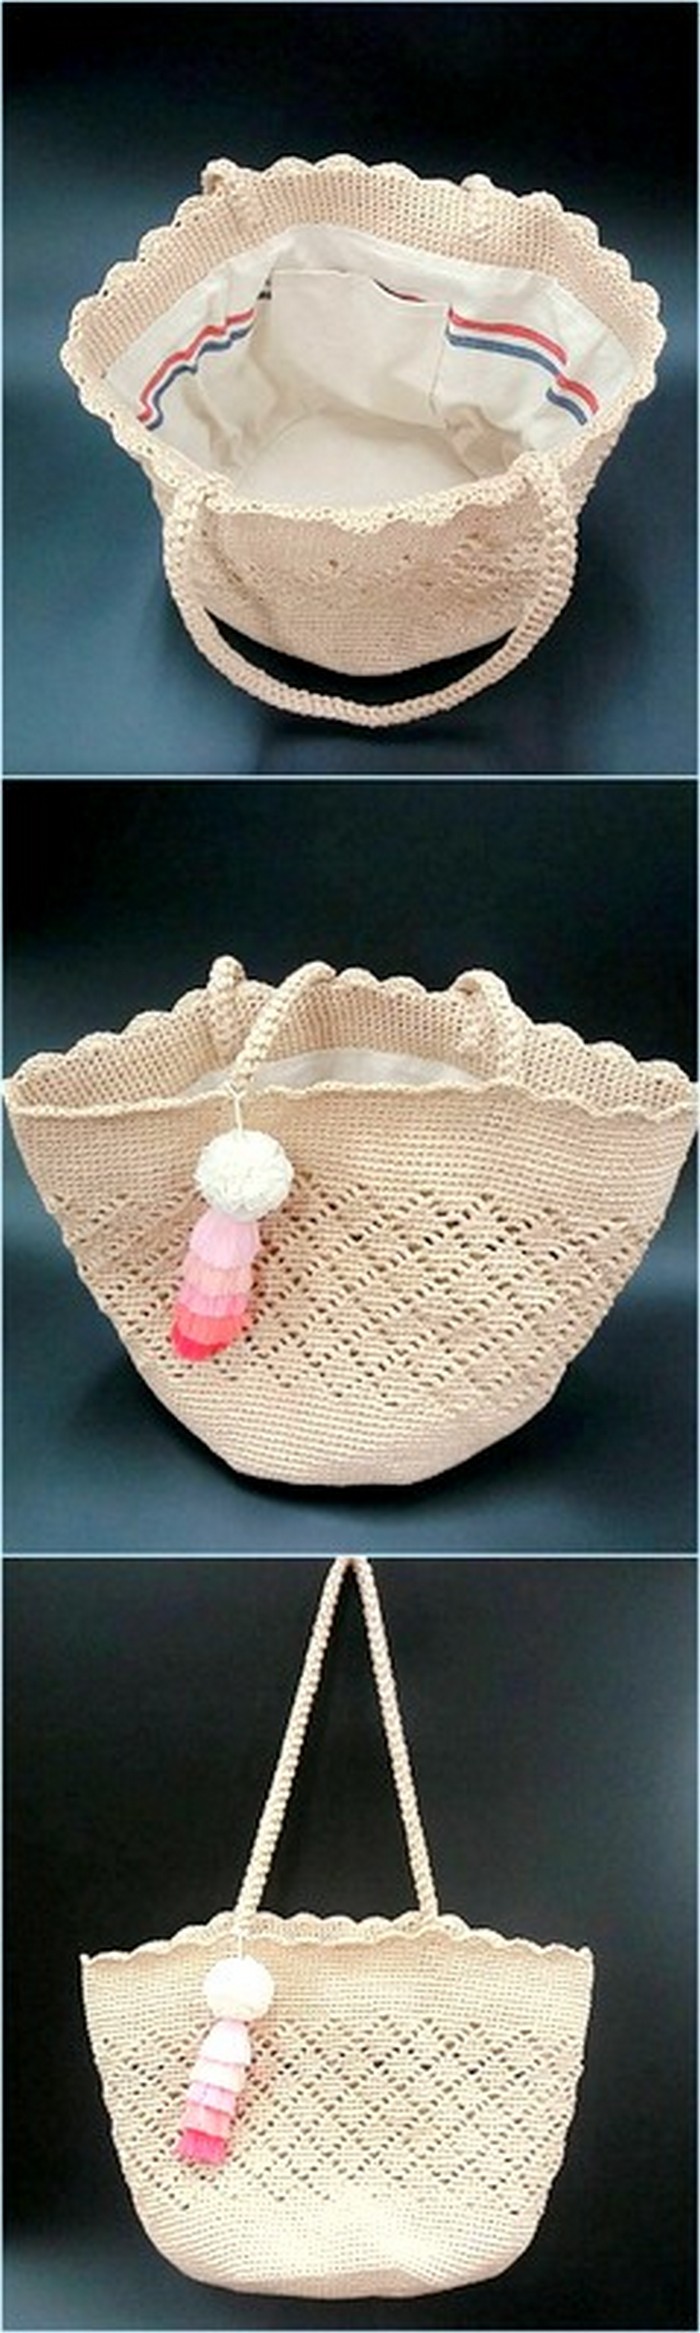 awesome crochet bag idea